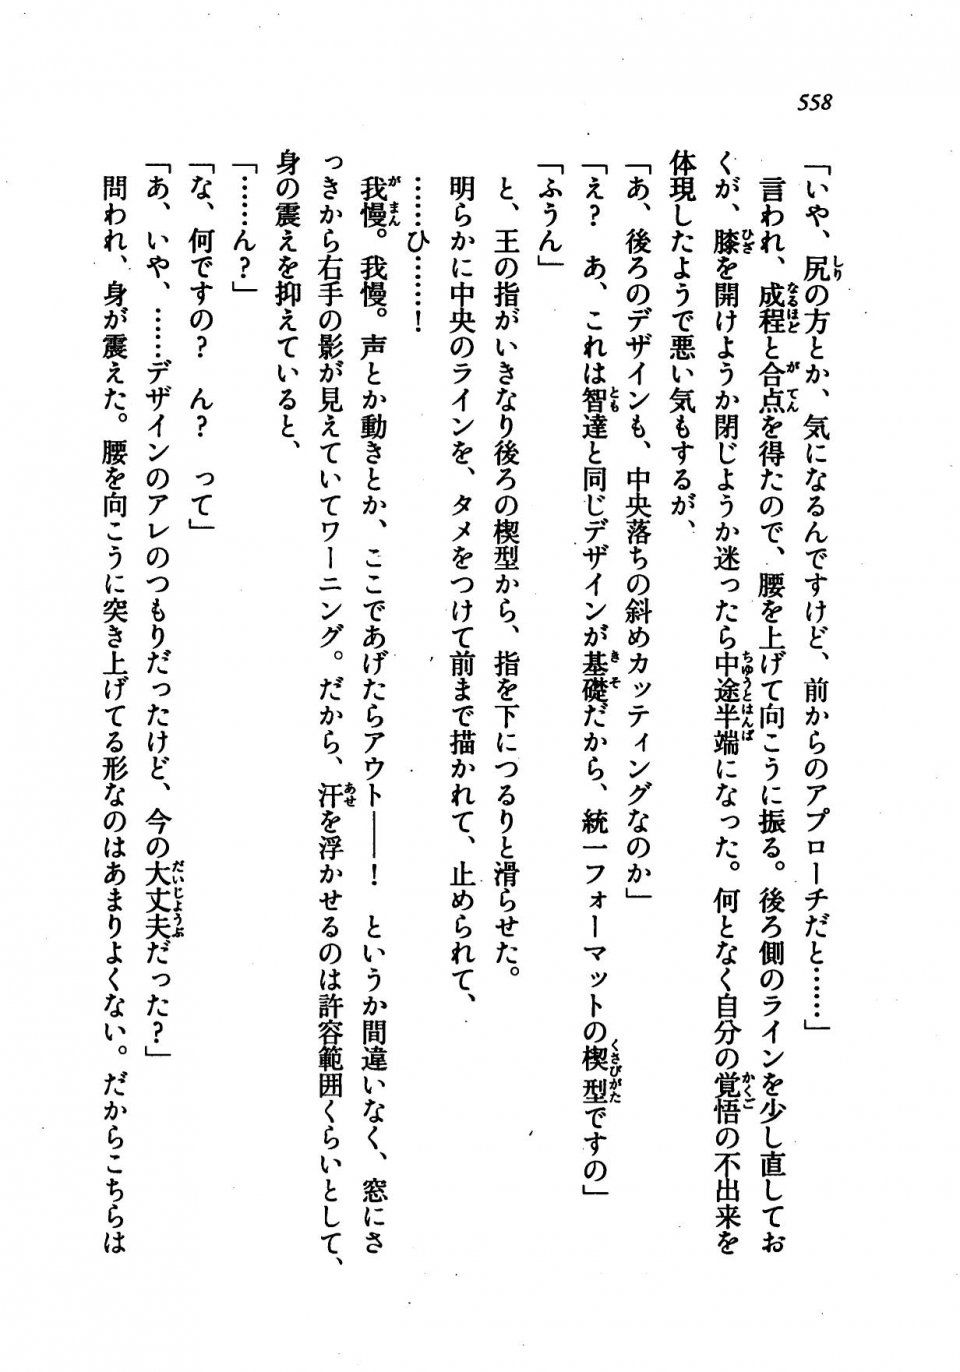 Kyoukai Senjou no Horizon LN Vol 21(8C) Part 2 - Photo #42